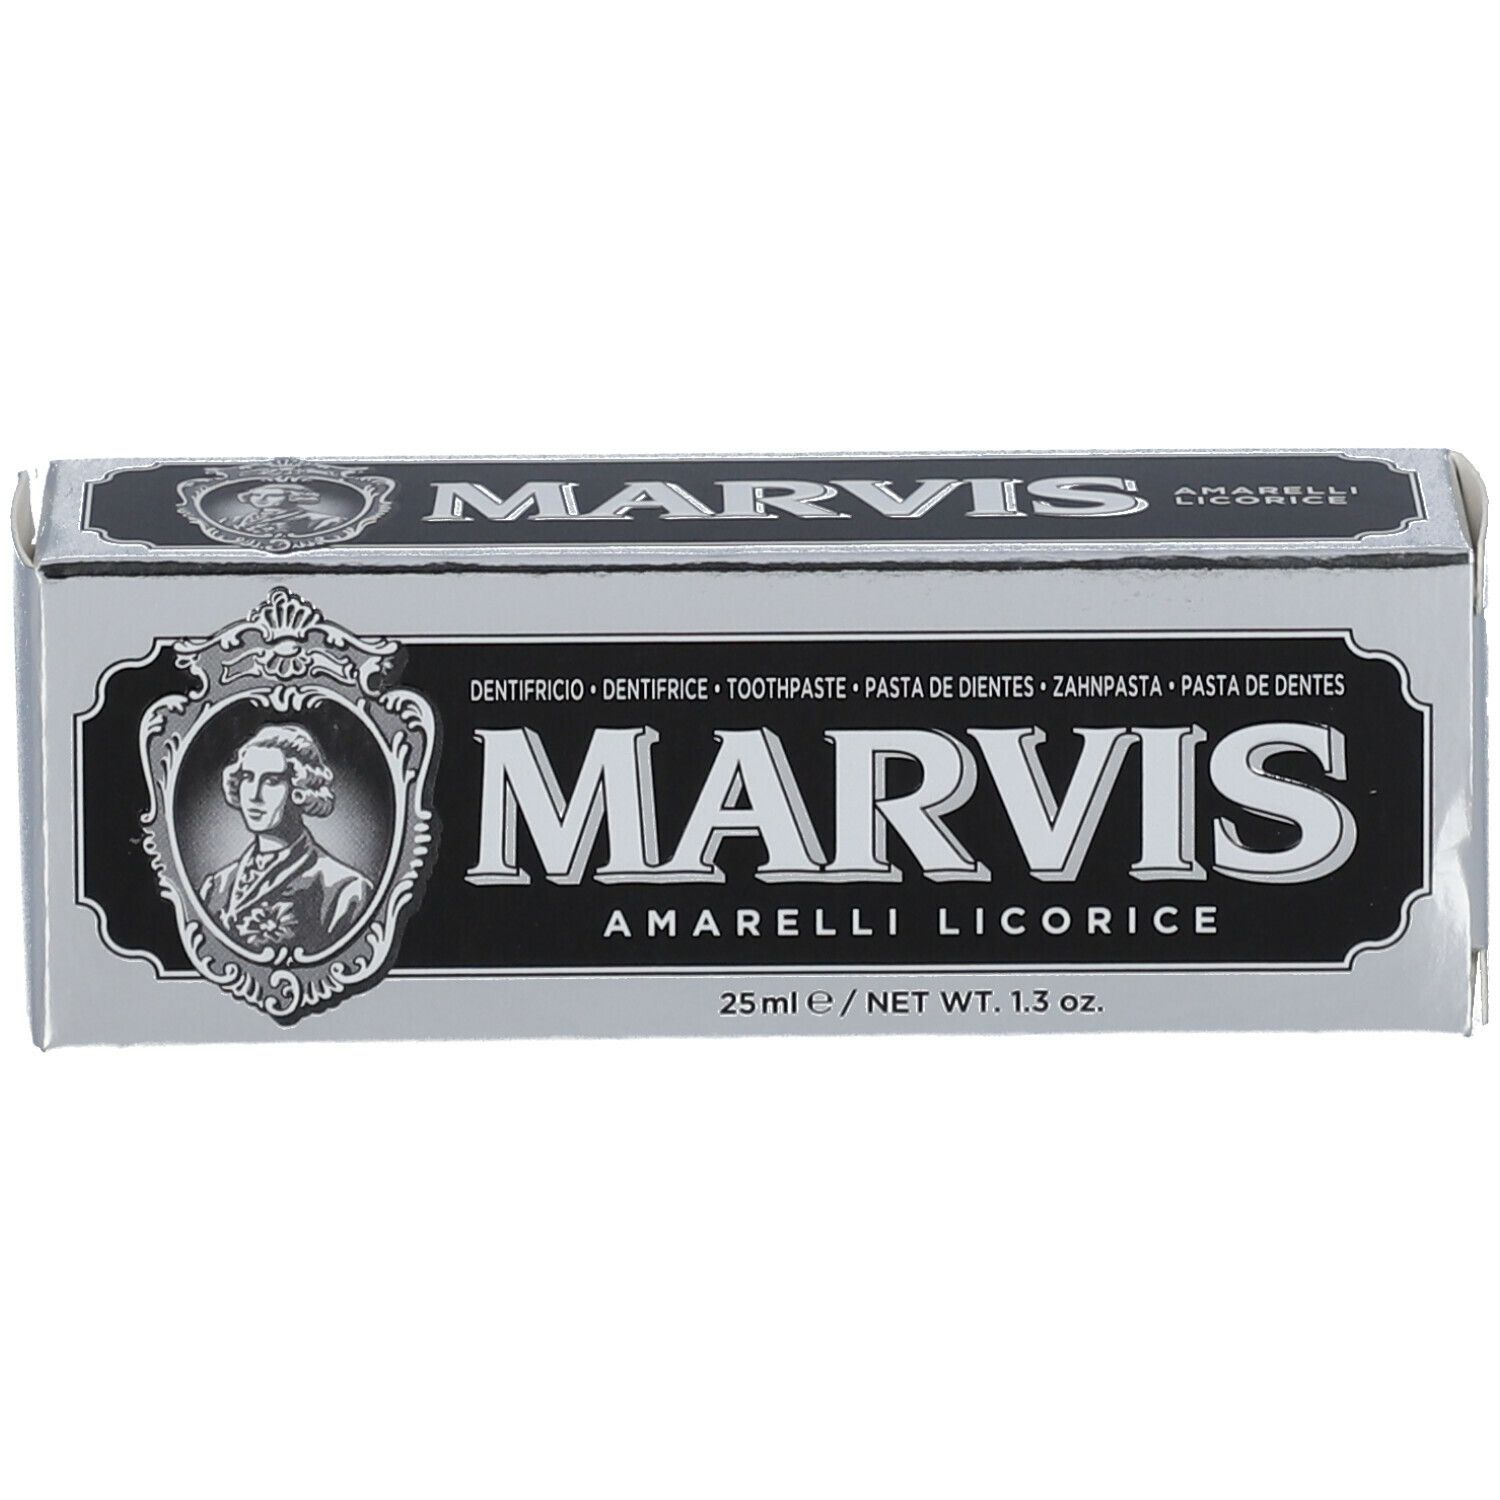 MARVIS Amarelli Licorice Dentifrice